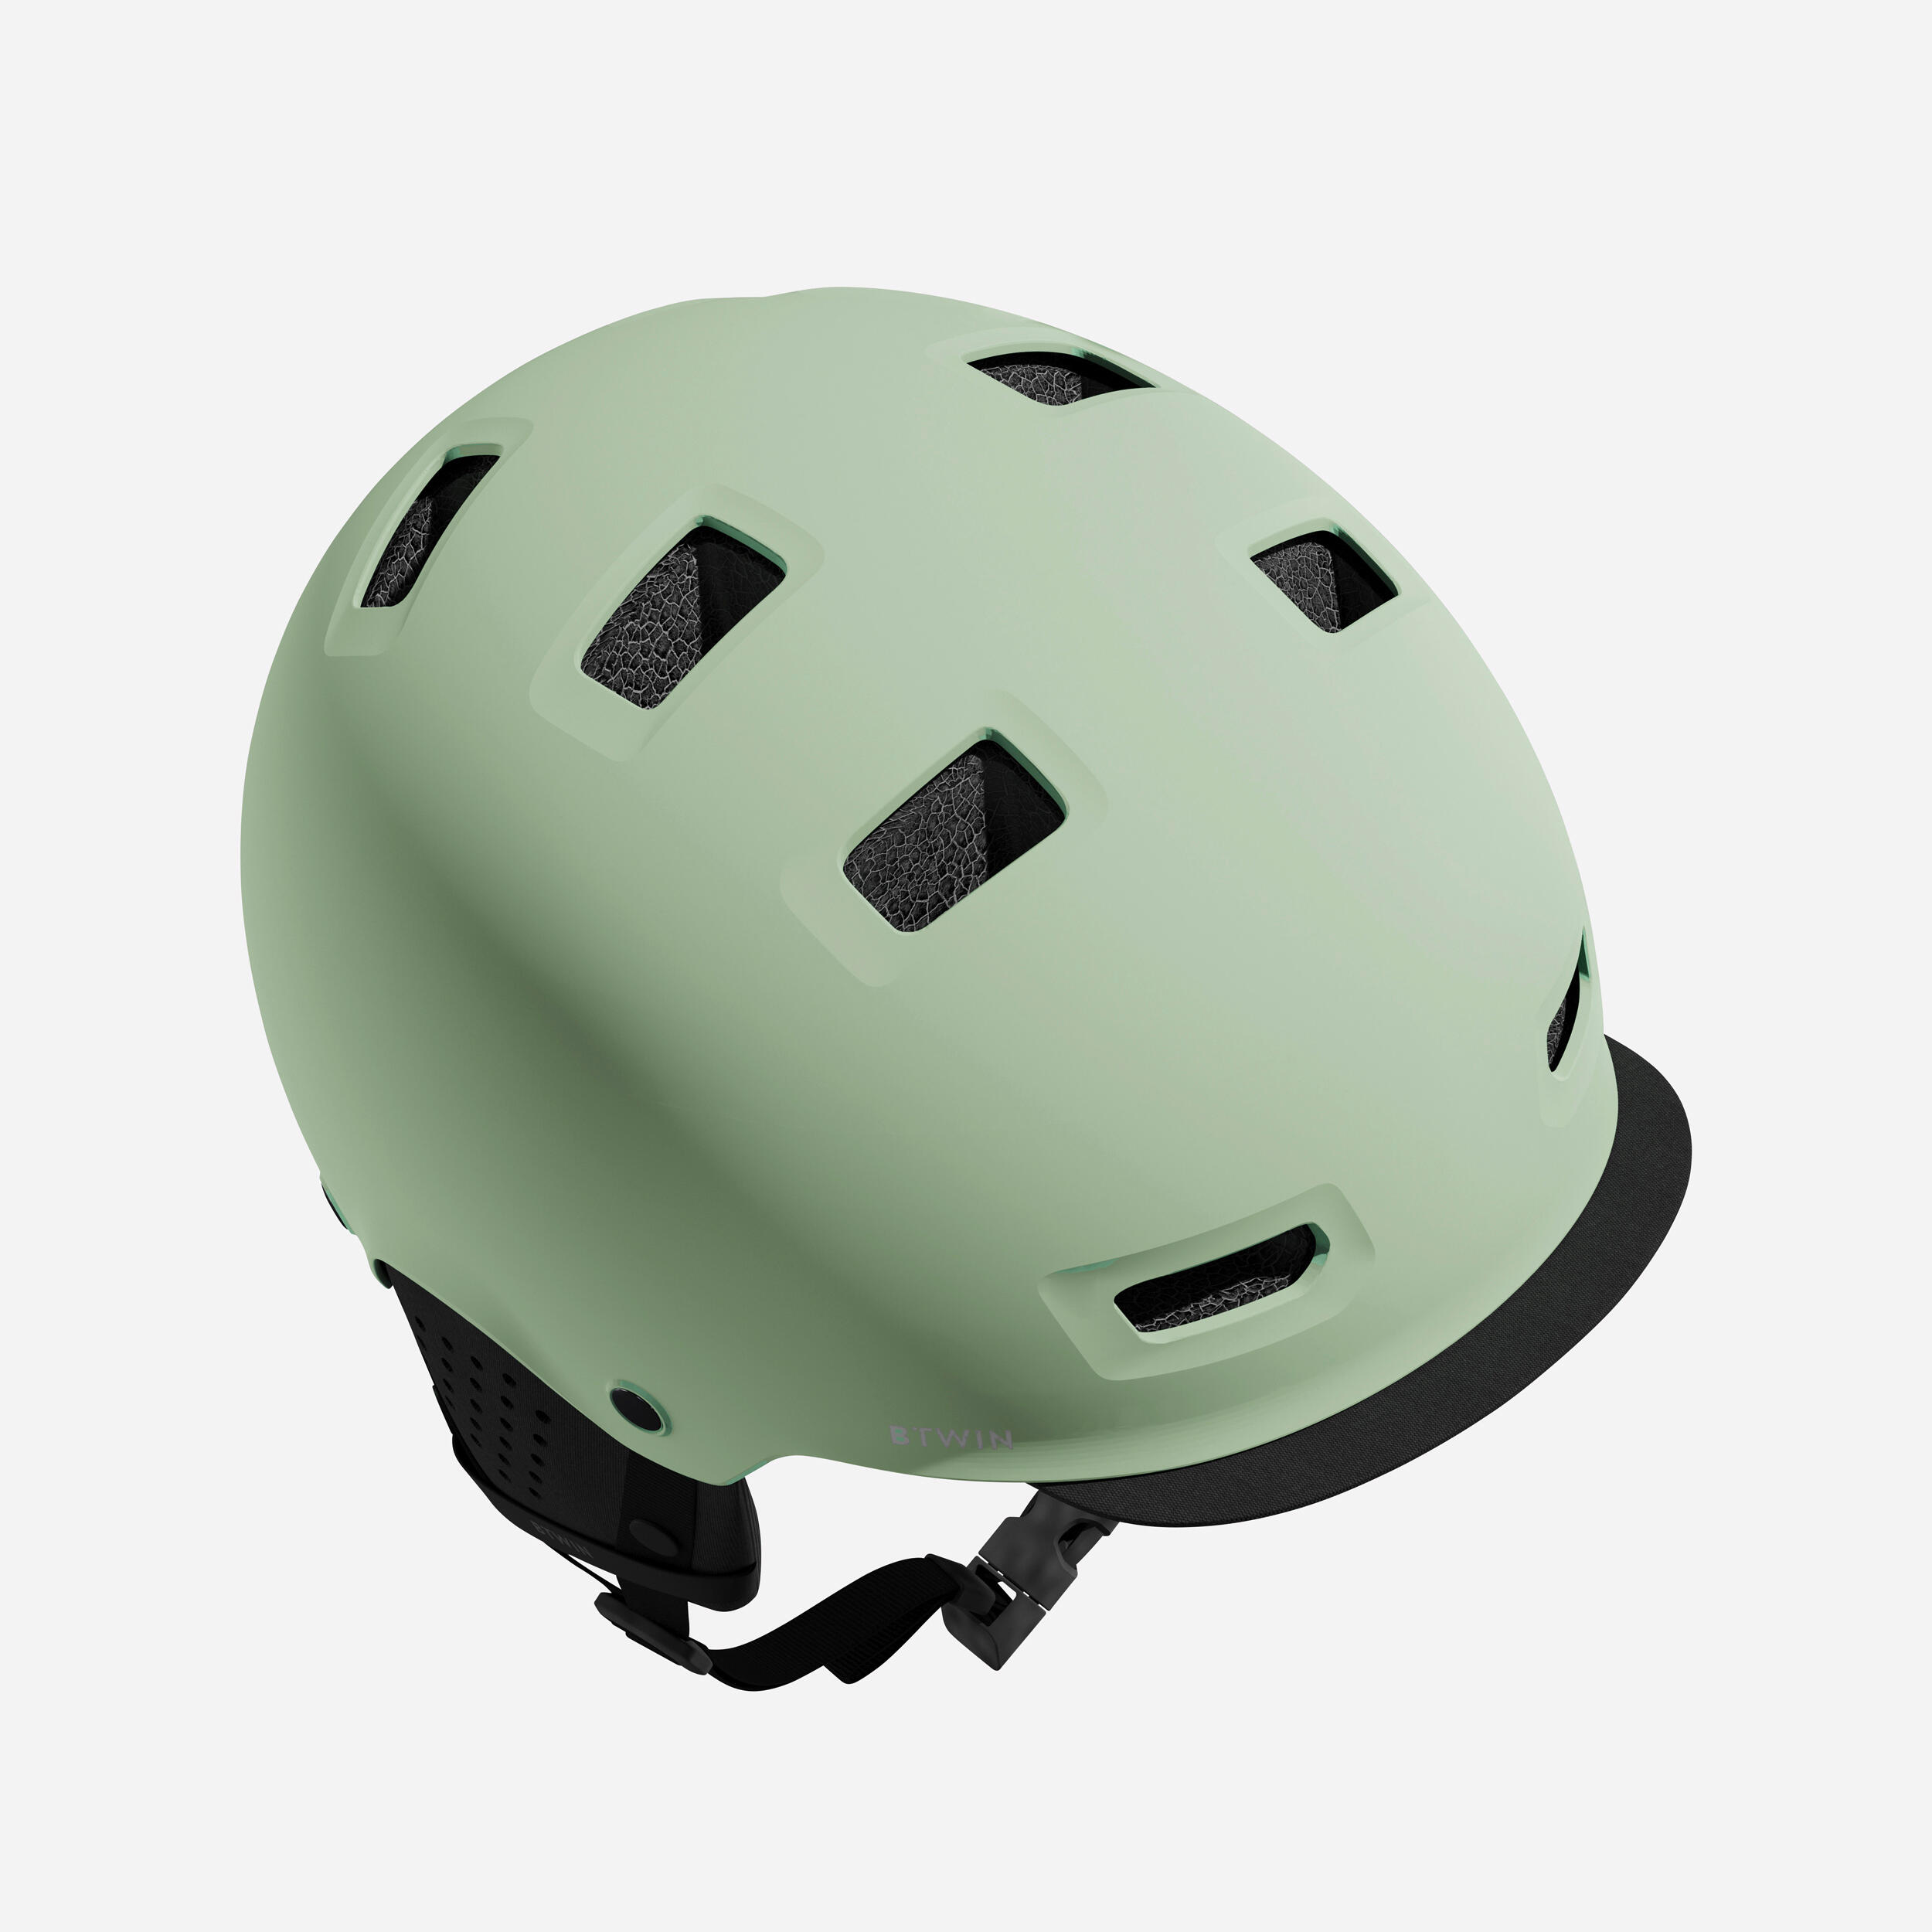 BTWIN City Cycling Bowl Helmet 500 - Rosemary Green